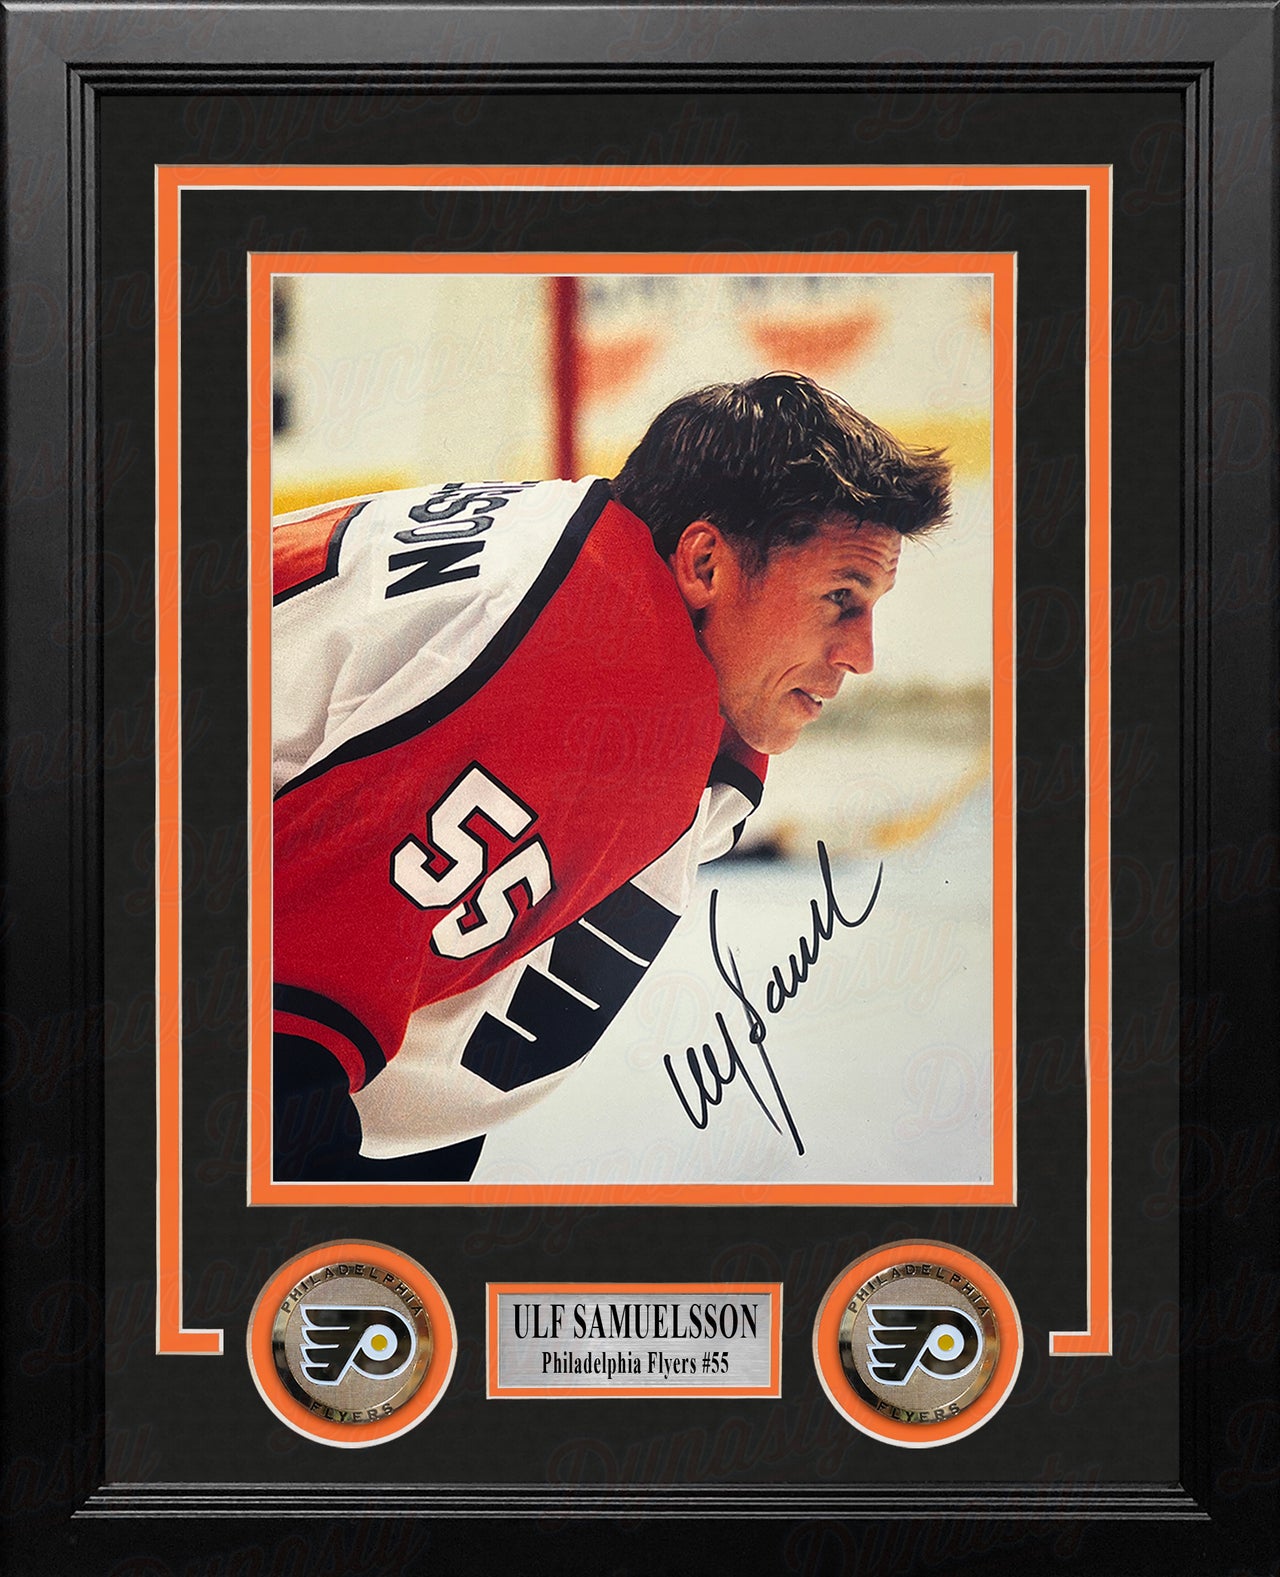 Ulf Samuelsson in Action Philadelphia Flyers Autographed 8" x 10" Framed Hockey Photo